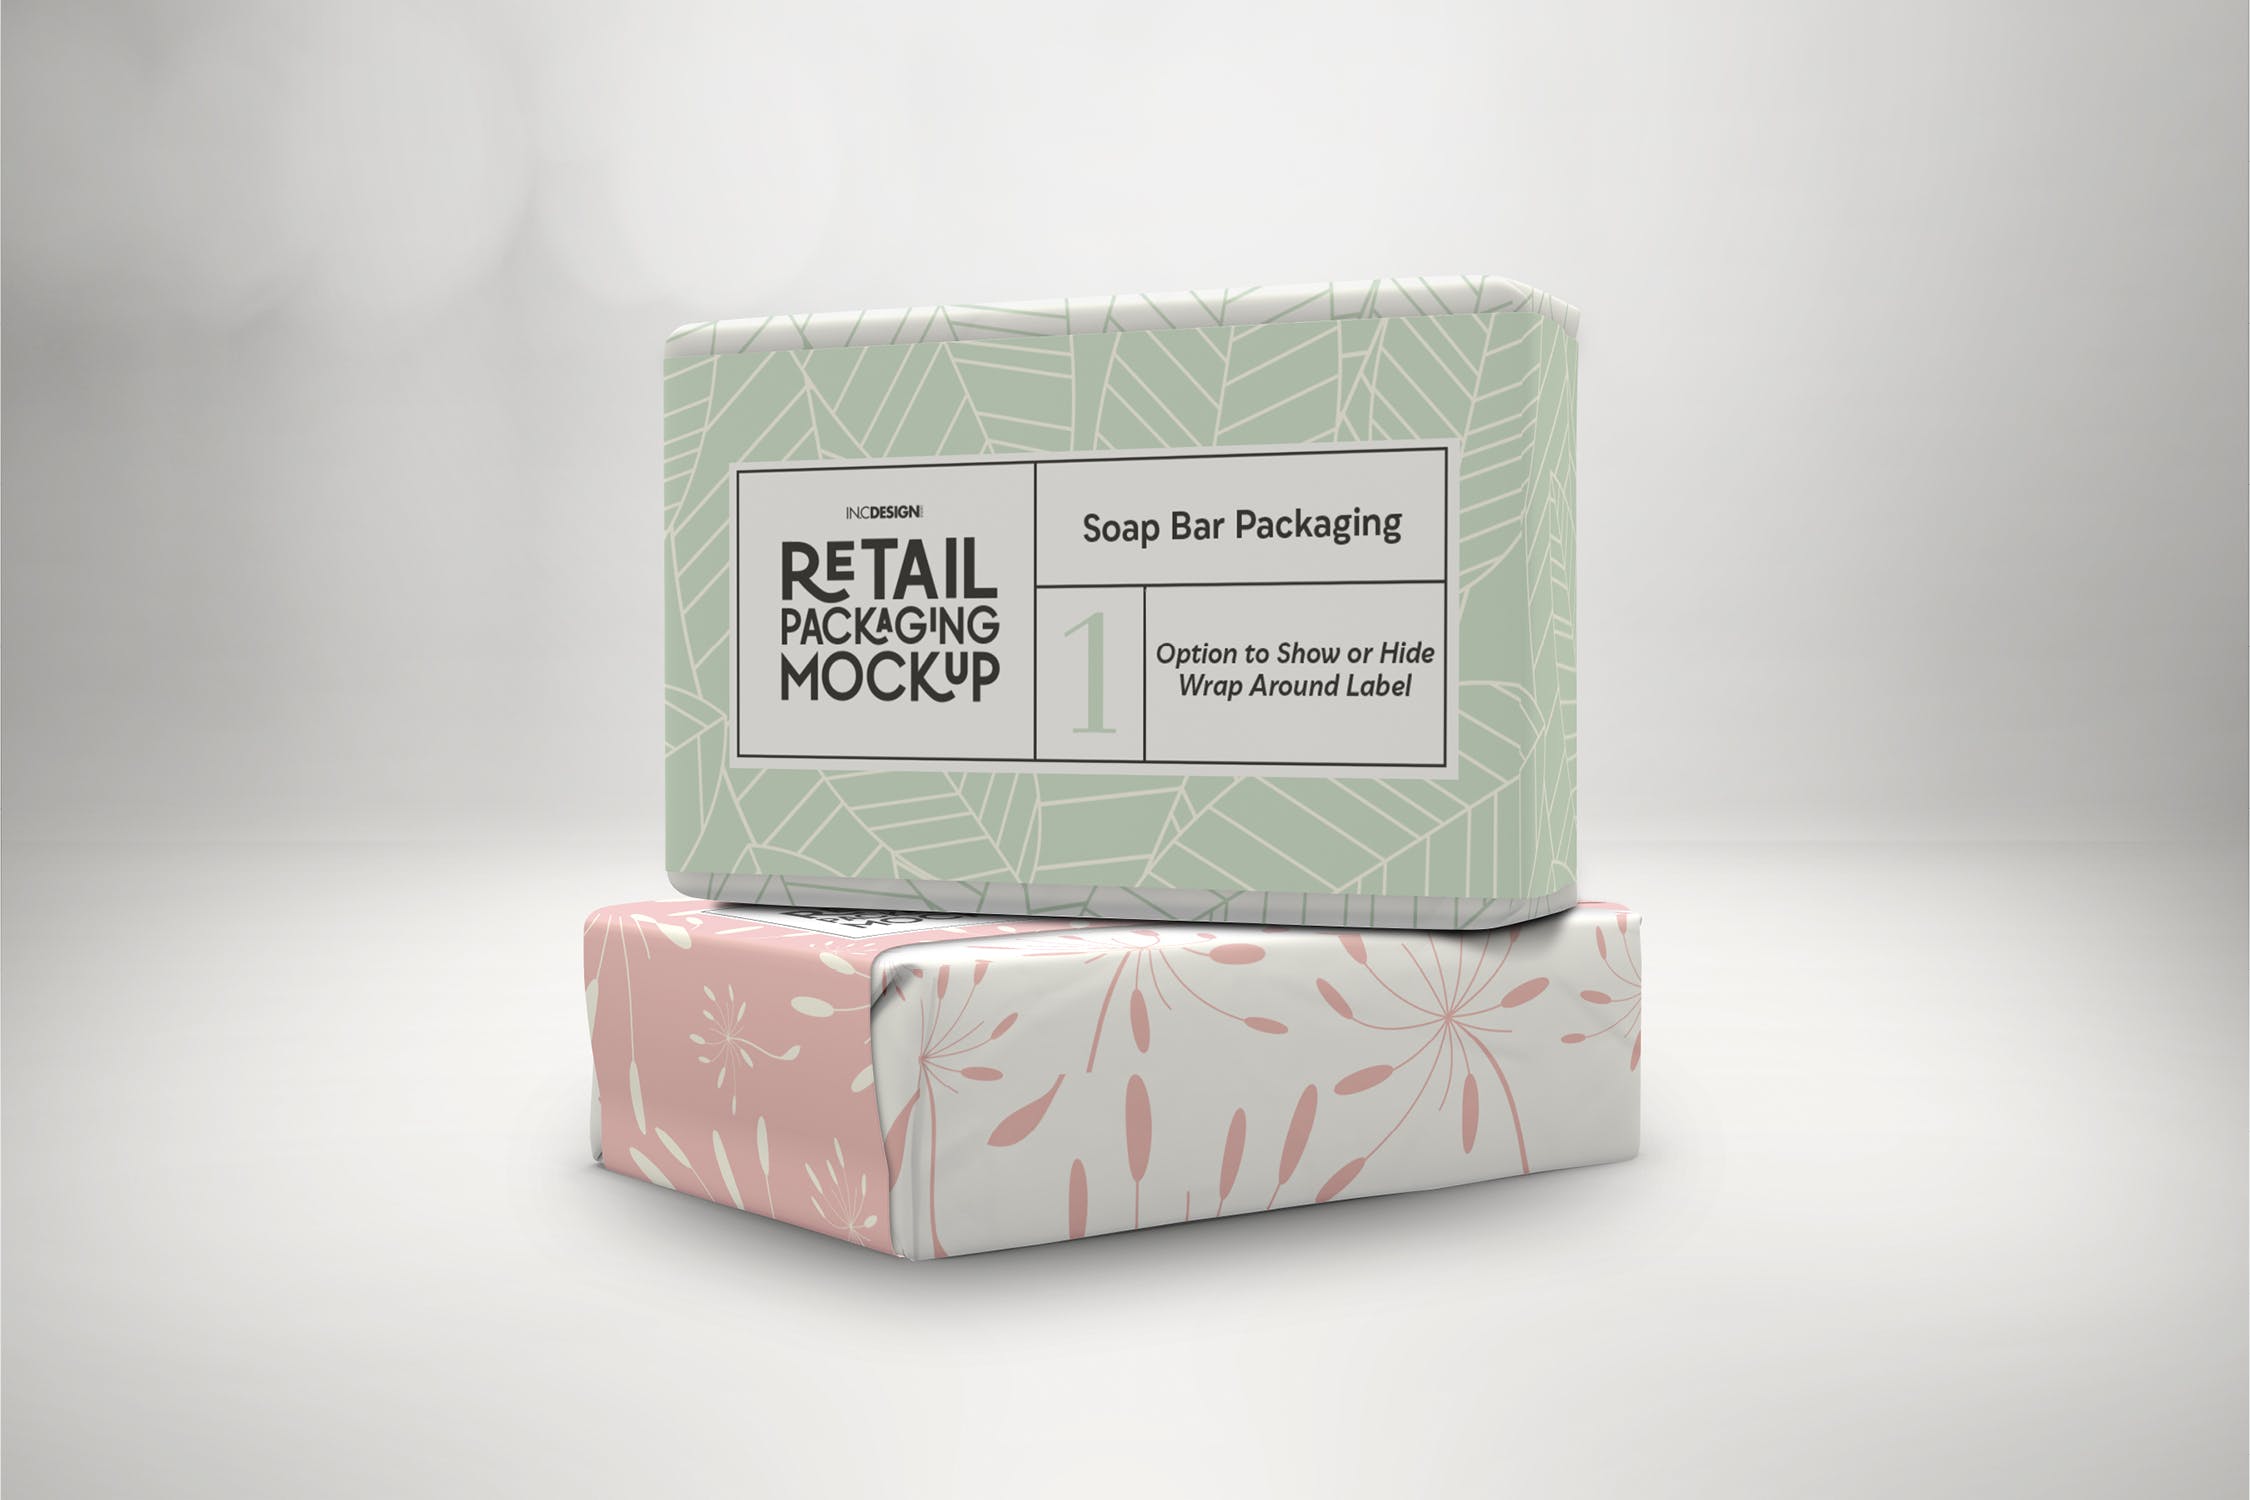 肥皂包装纸袋设计效果图16设计网精选 Retail Soap Bar Packaging Mockup插图(1)